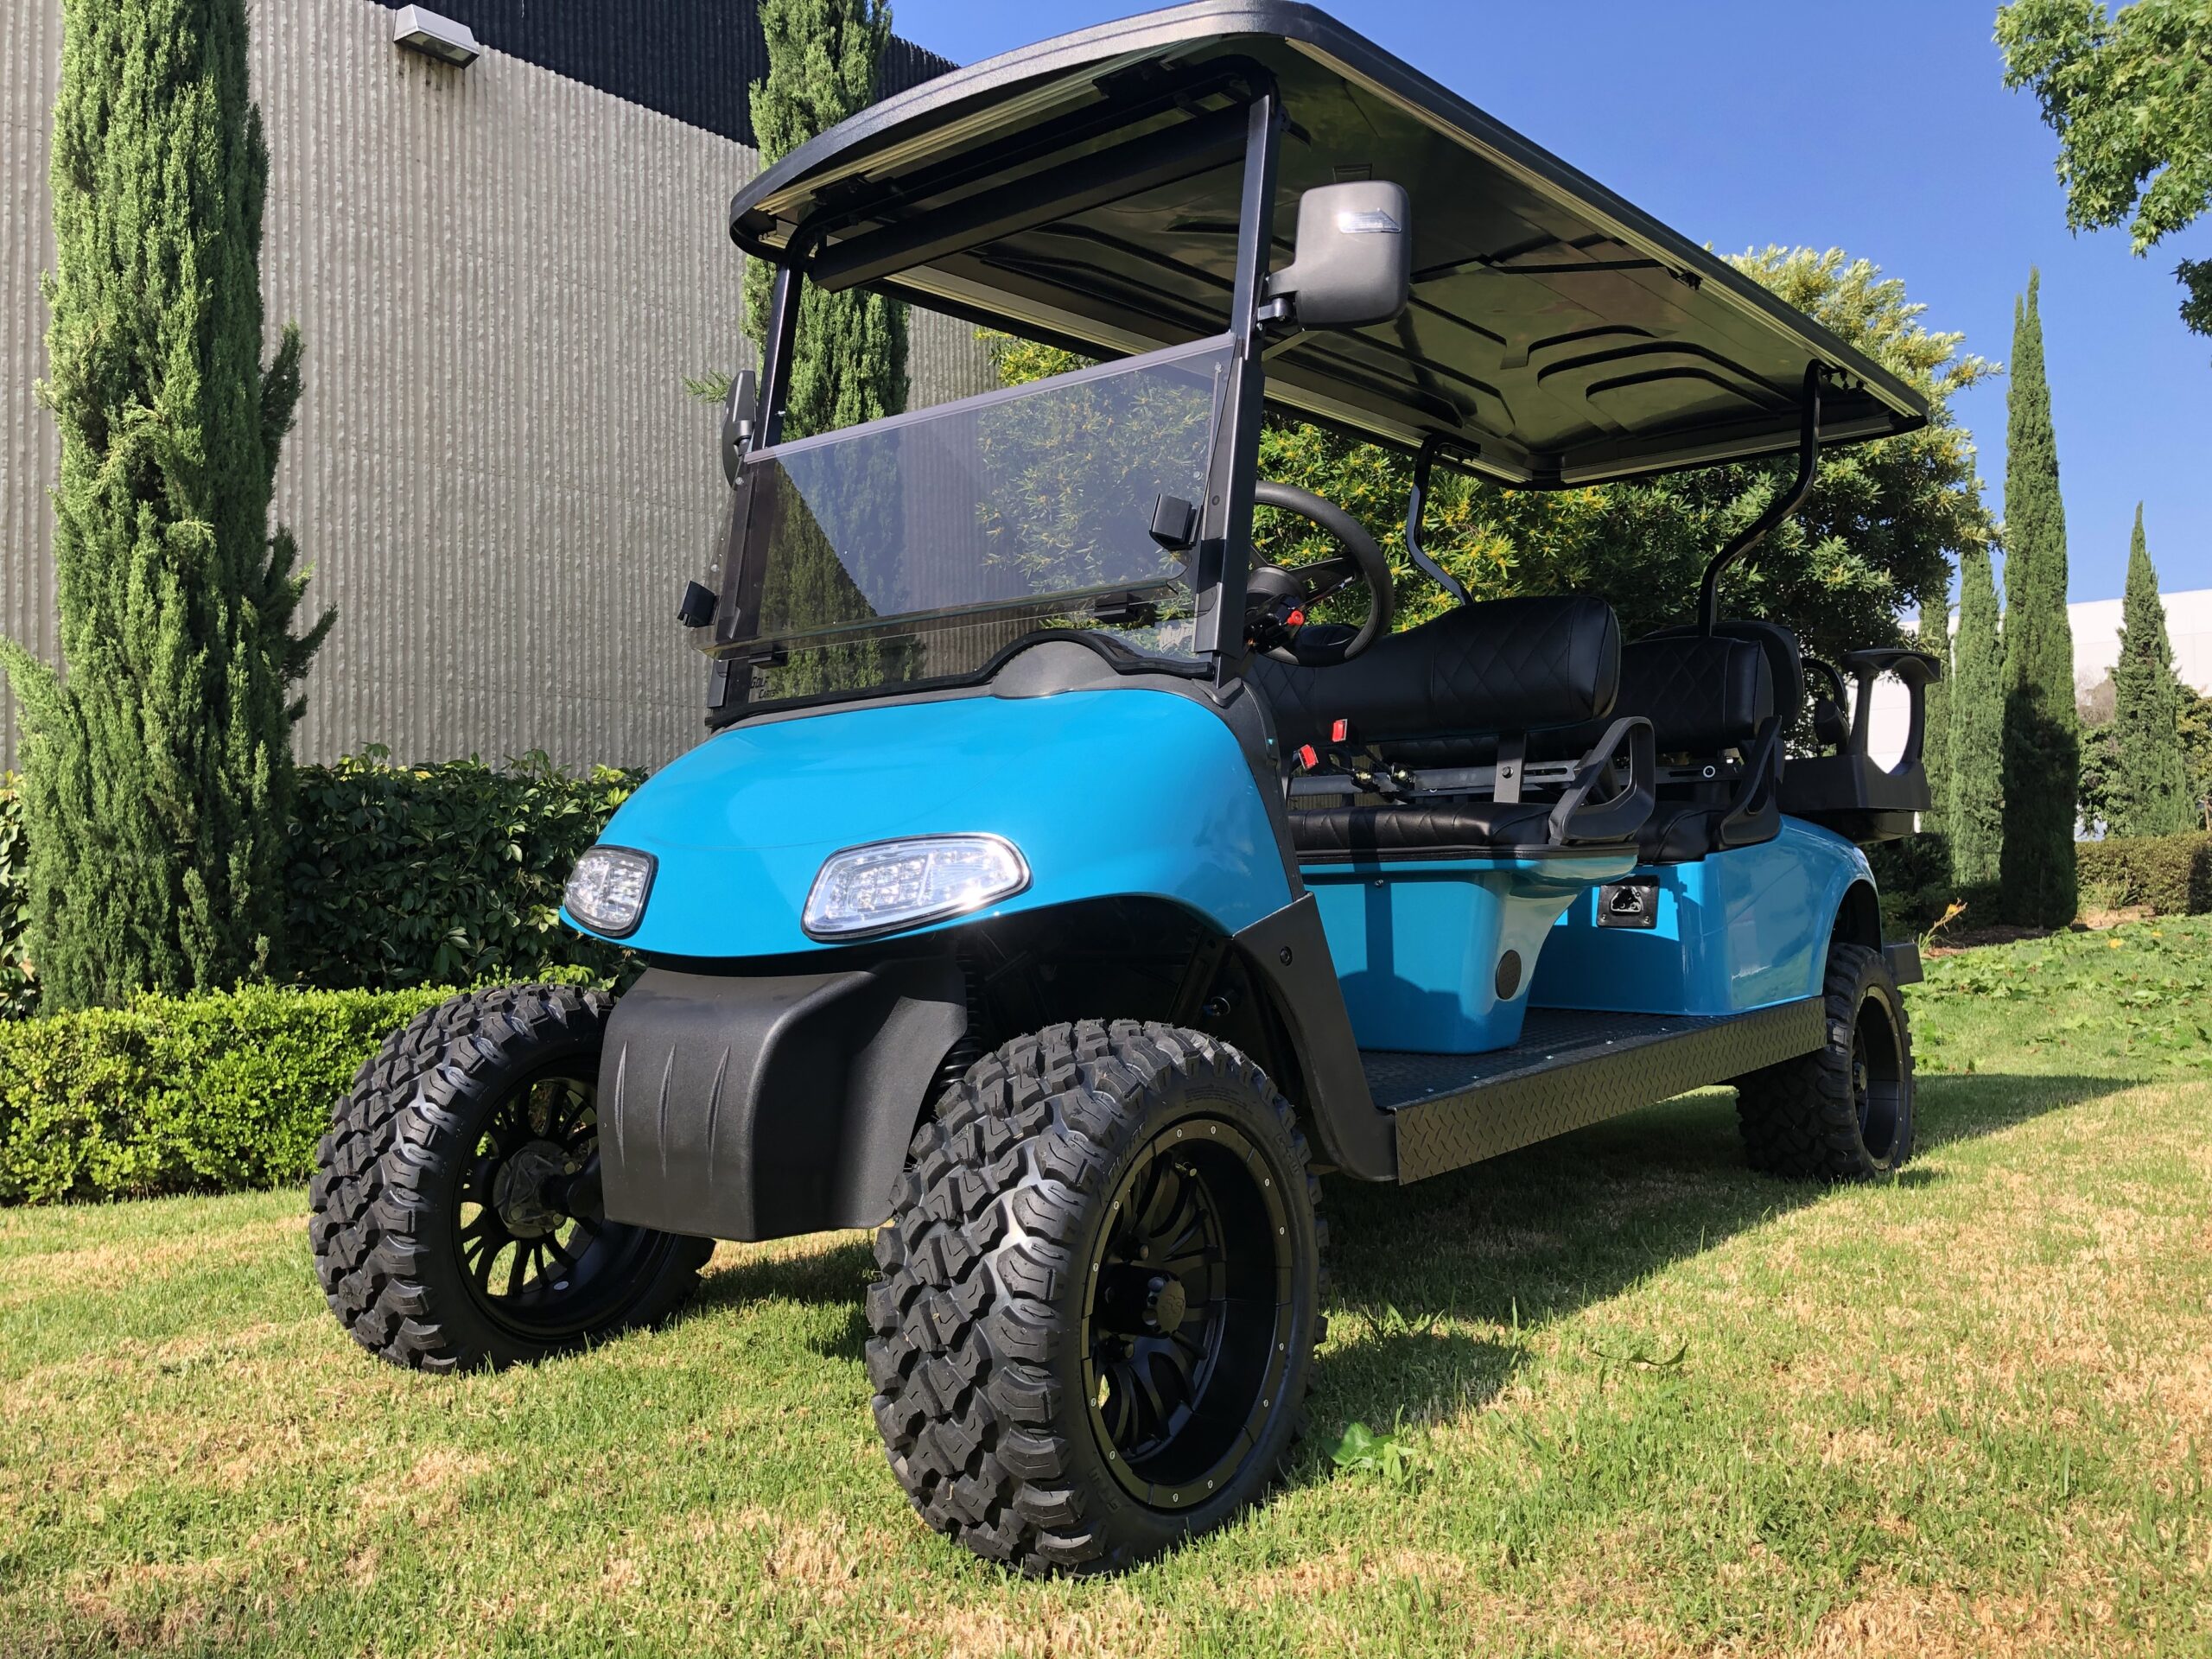 Custom Built Refurbished Limo-Stretched EZGO RXV 6 Passenger Golf Cart – Miami Blue #37